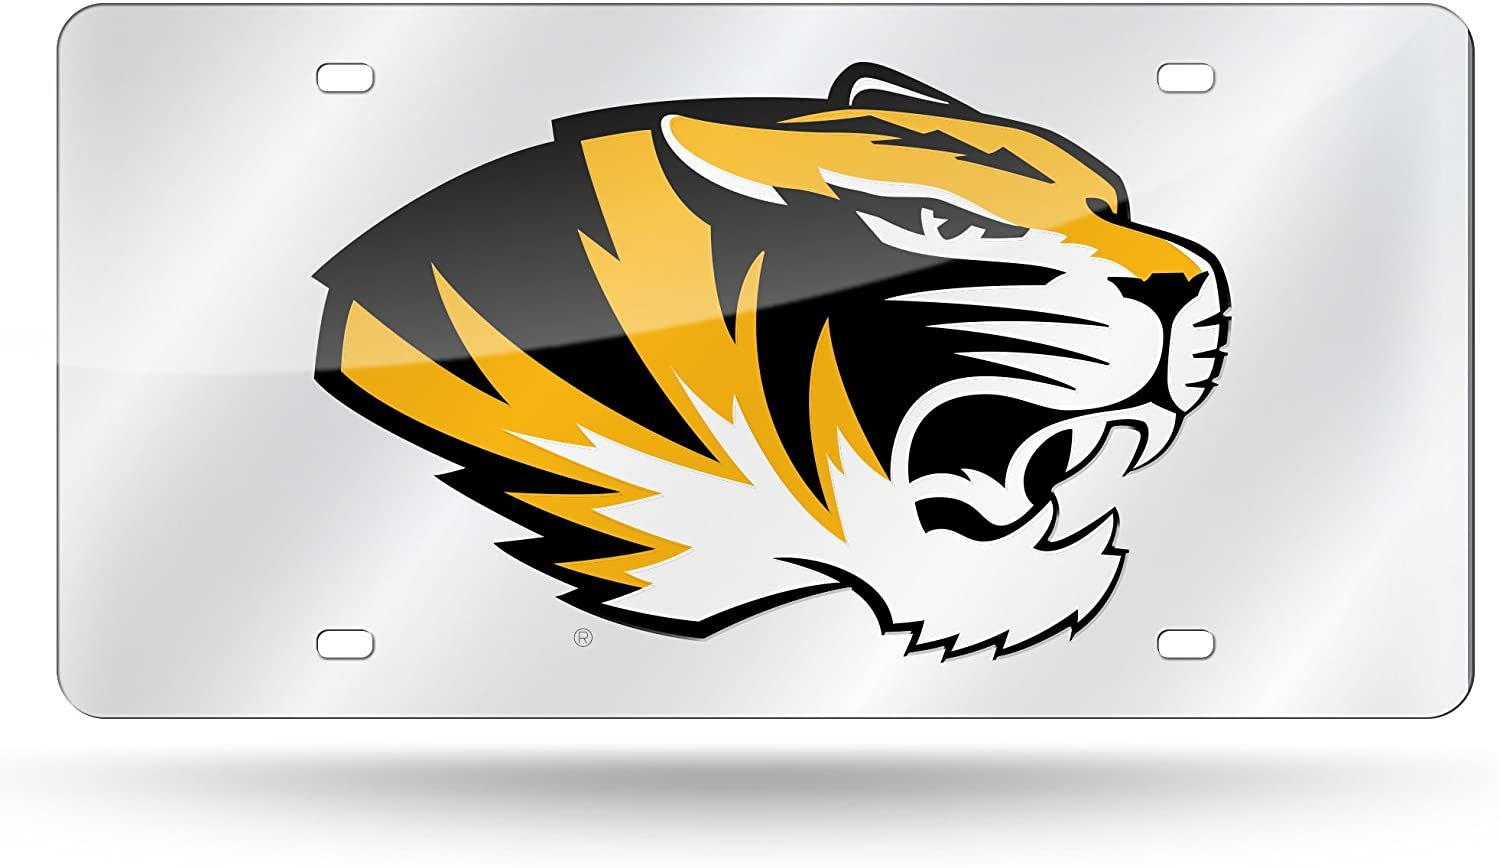 University of Missouri Tigers Premium Laser Cut Tag License Plate, Mirrored Acrylic Inlaid, 12x6 Inch